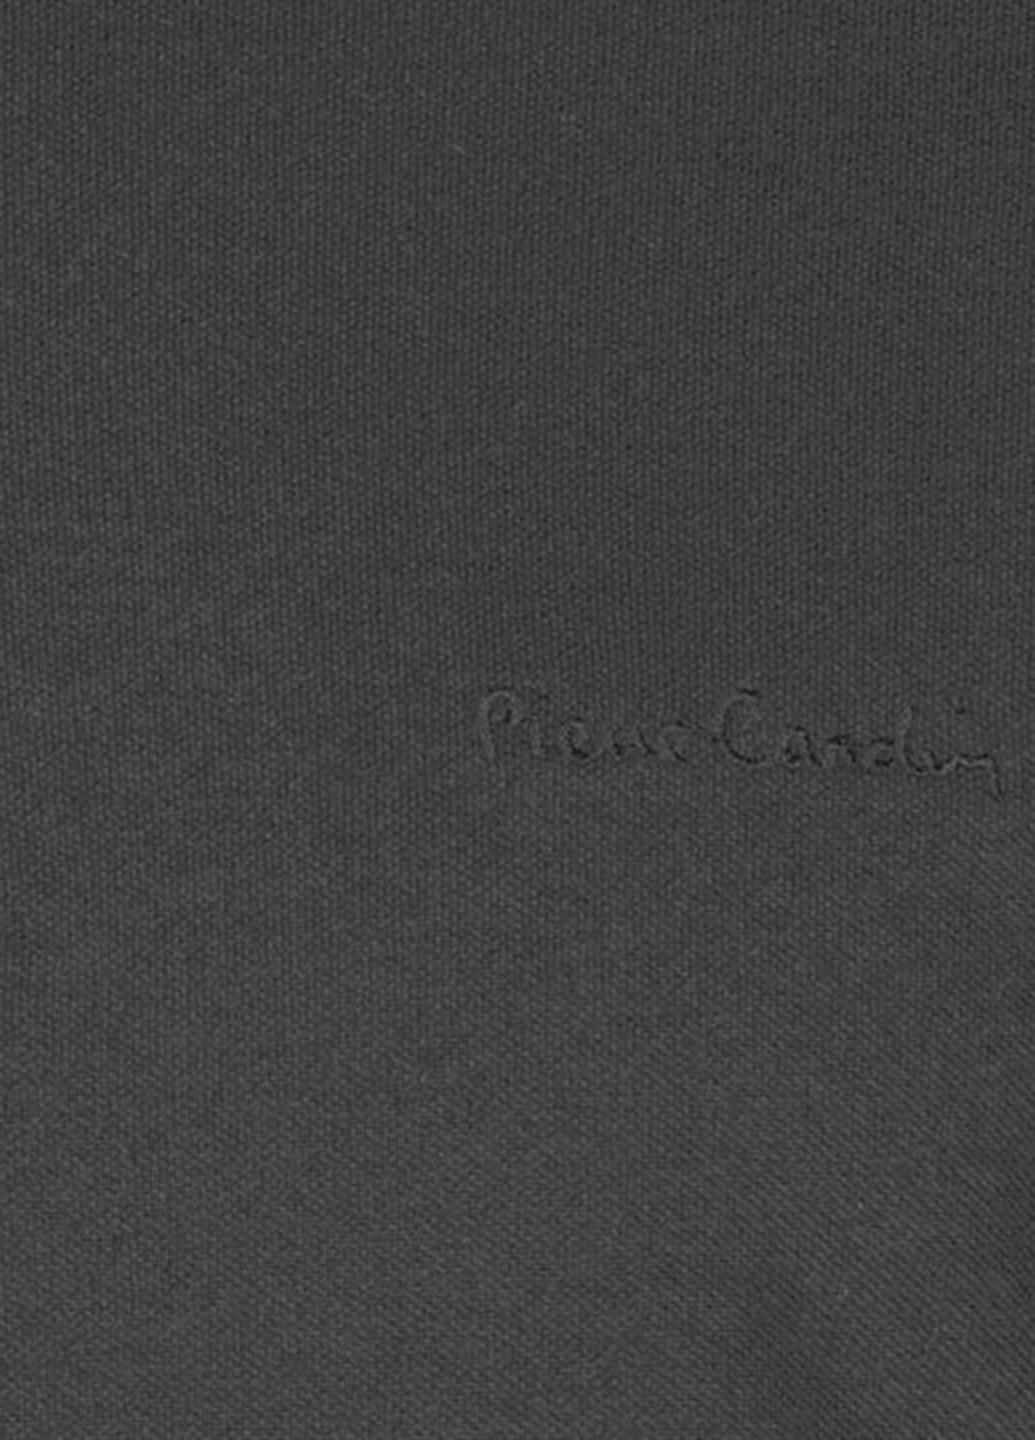 Темно-серая футболка-поло для мужчин Pierre Cardin меланжевая